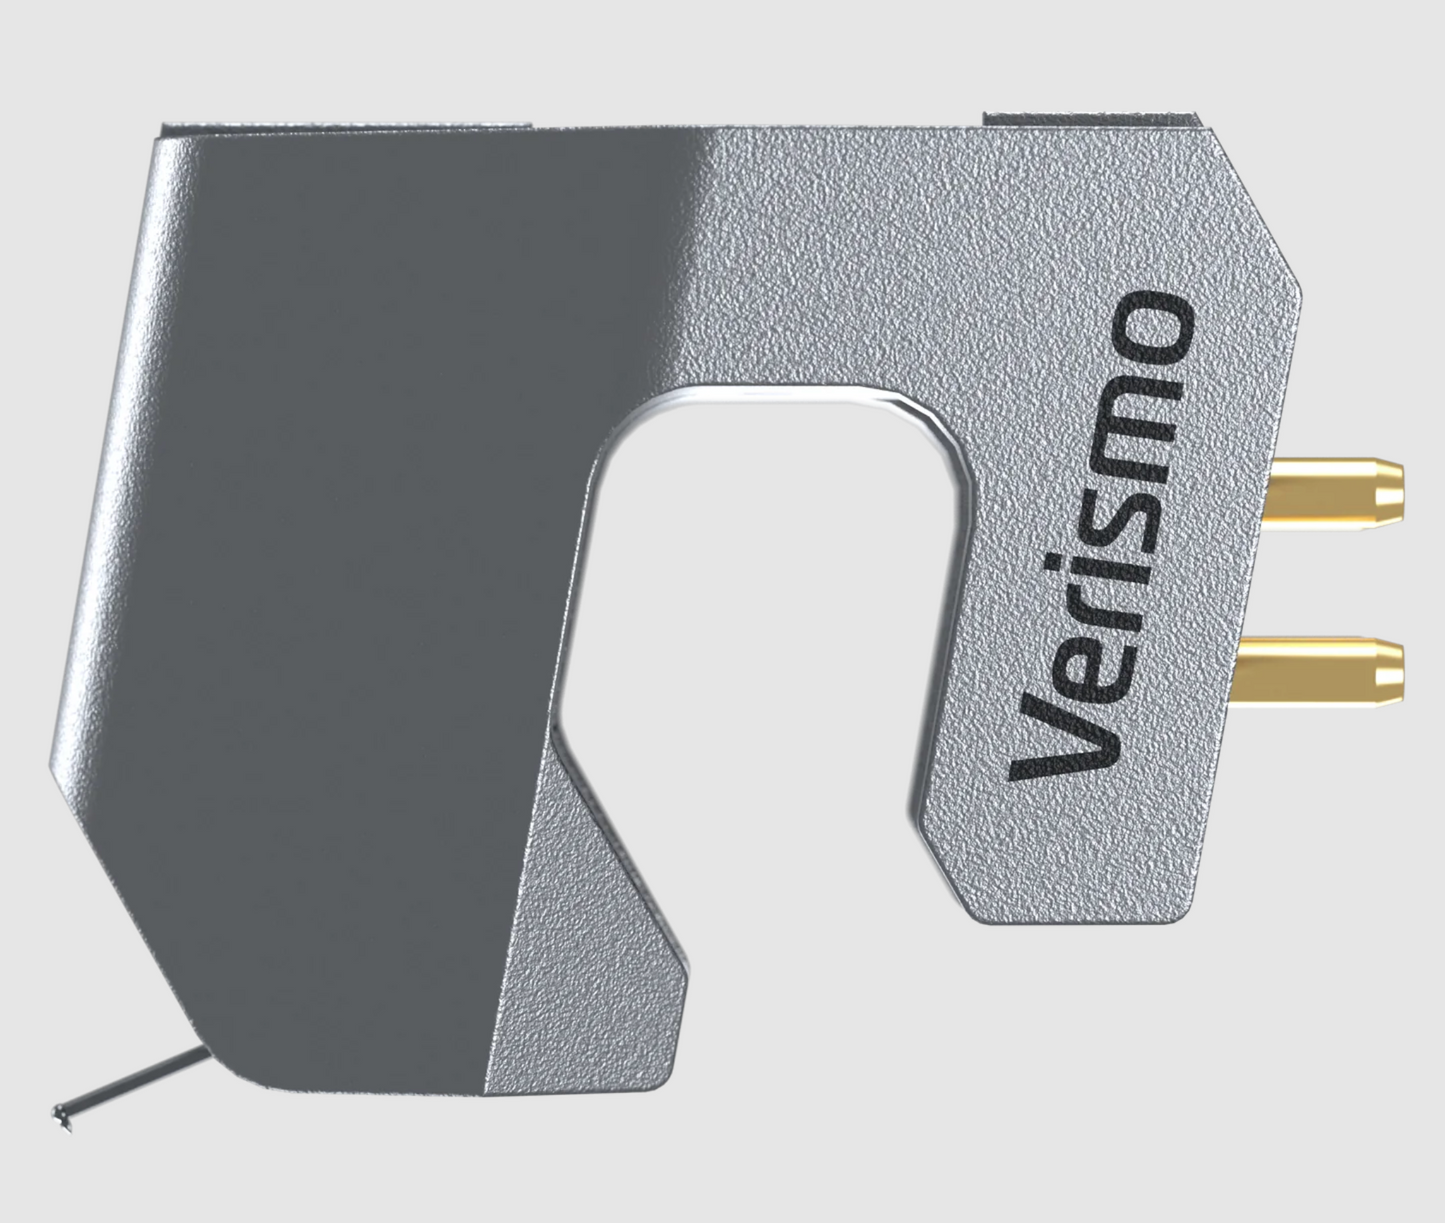 Ortofon MC Verisimo Moving Coil Cartridge - image of the right side